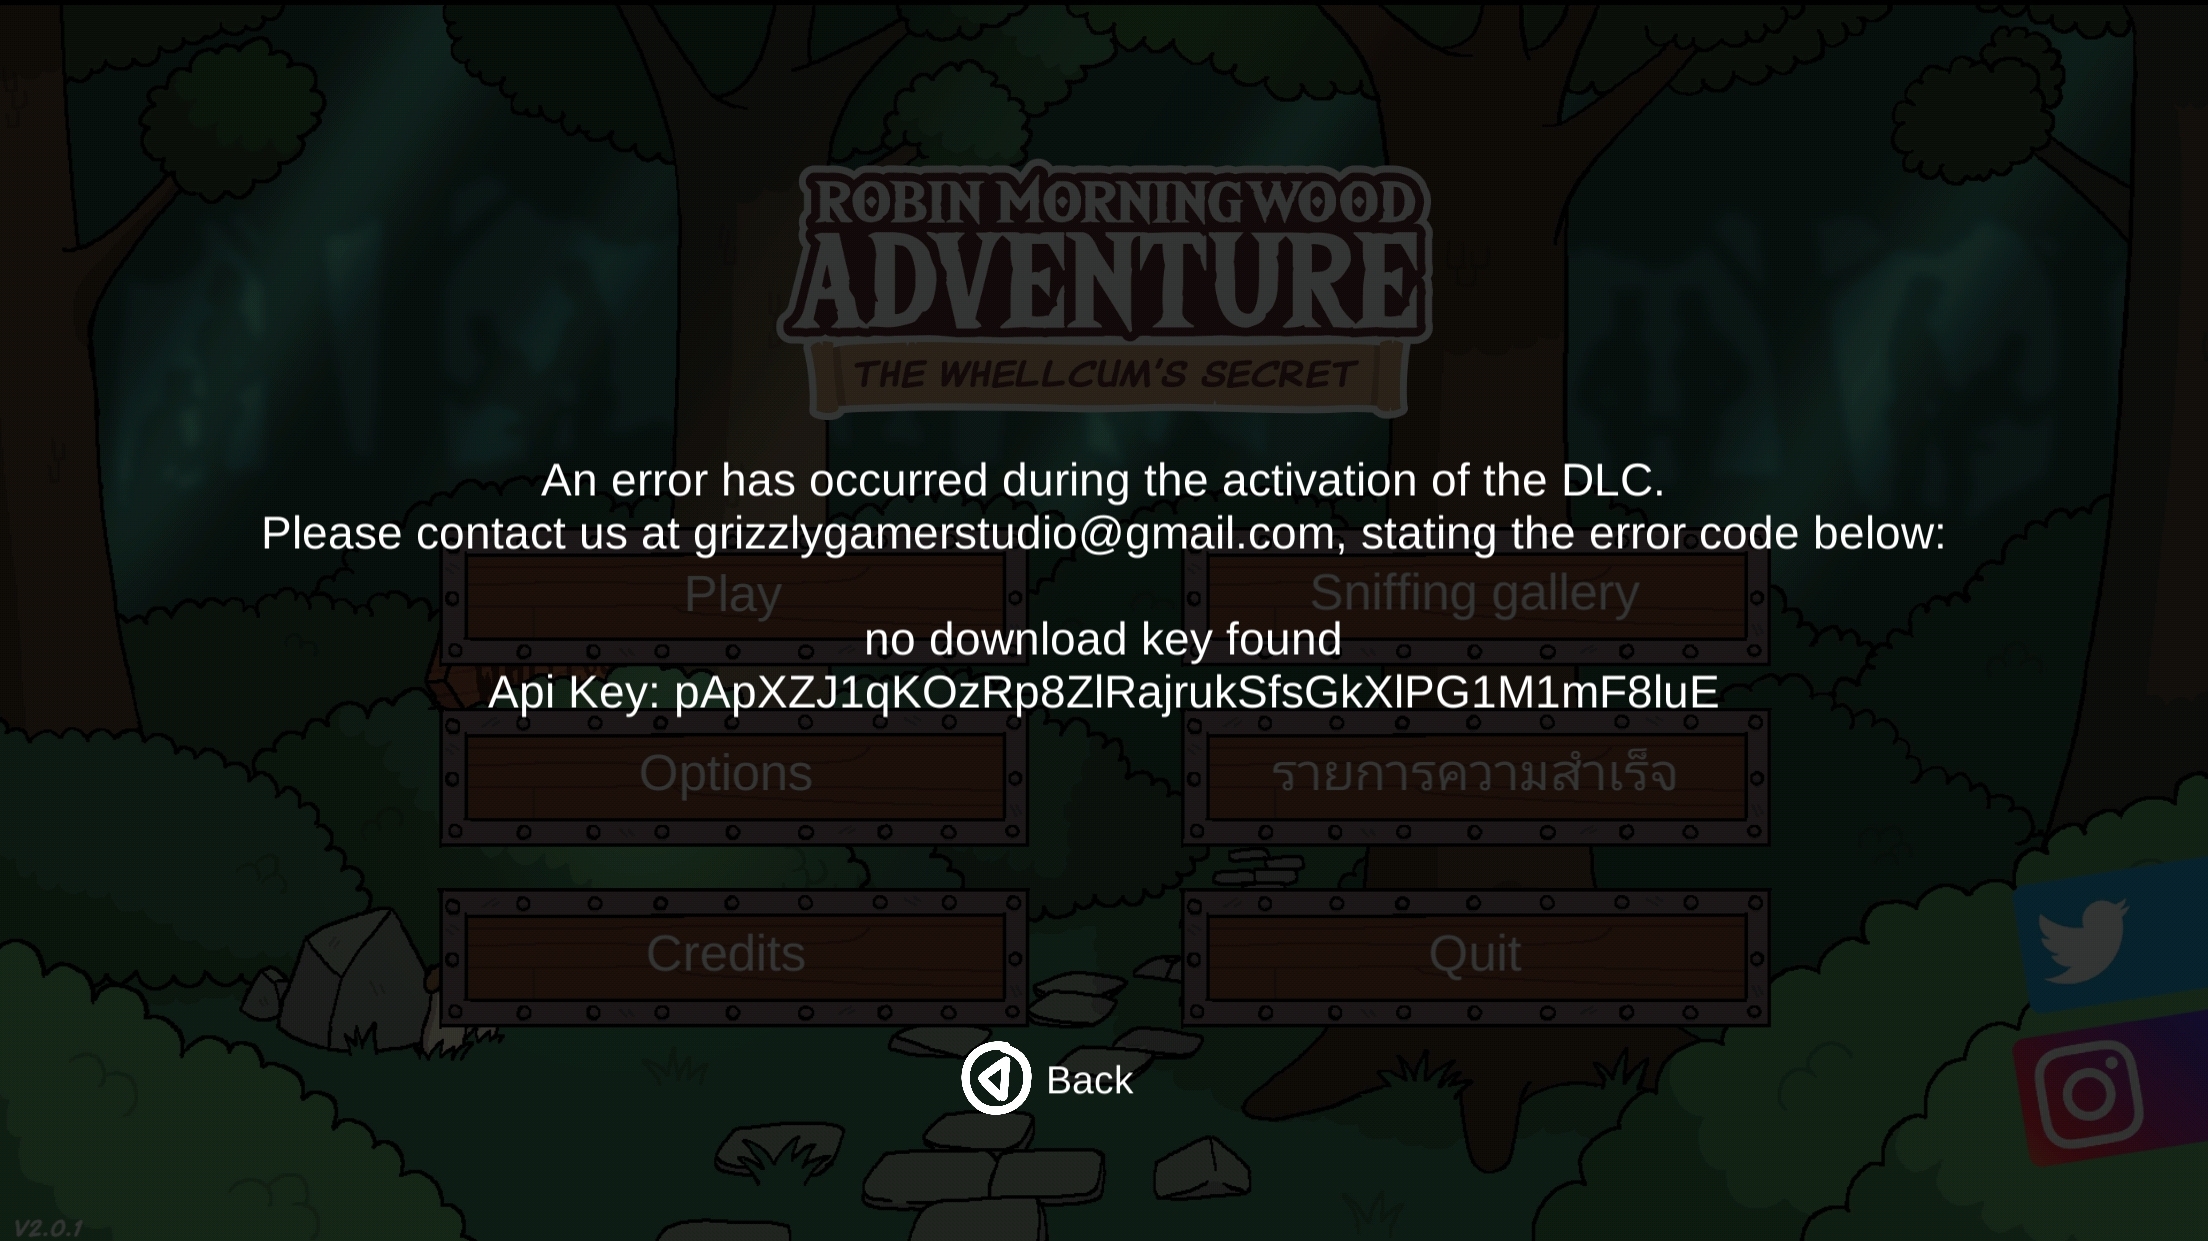 Key DLC error